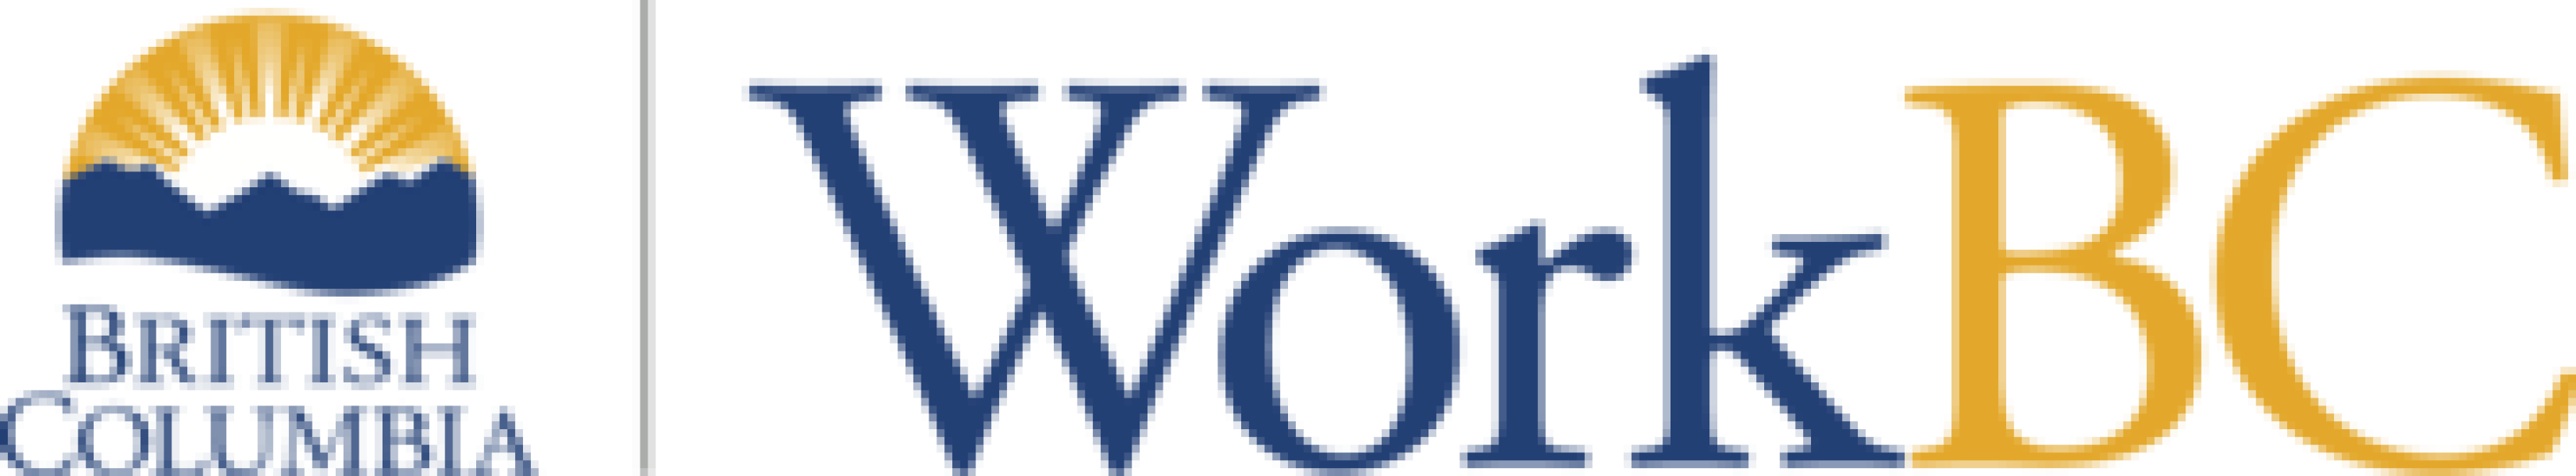 Work BC logo